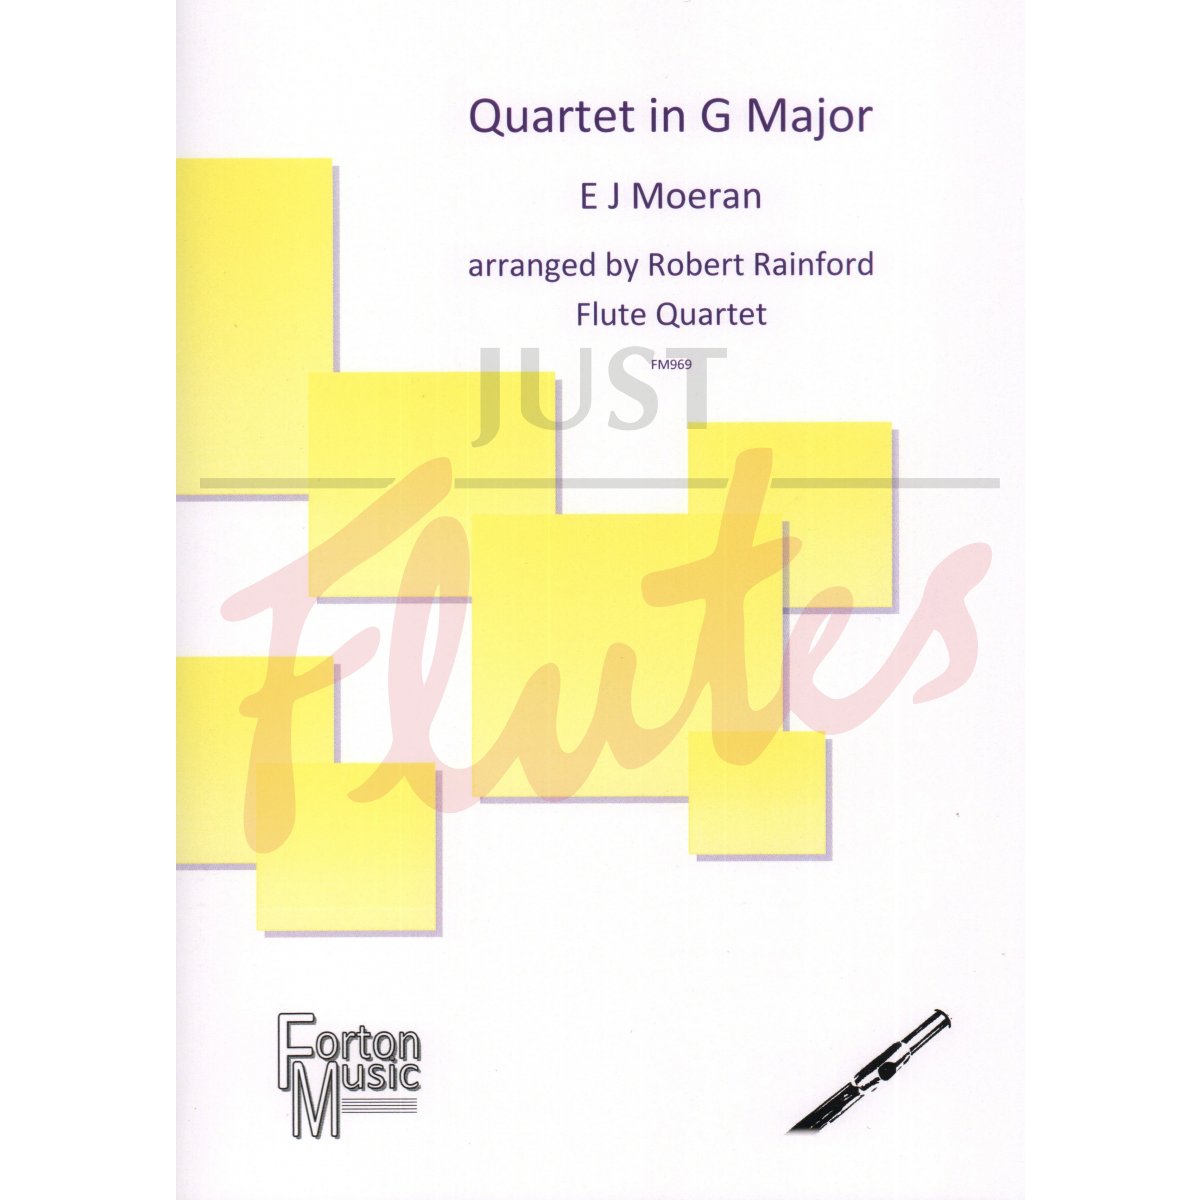 Quartet in G major arranged for Flute Quartet